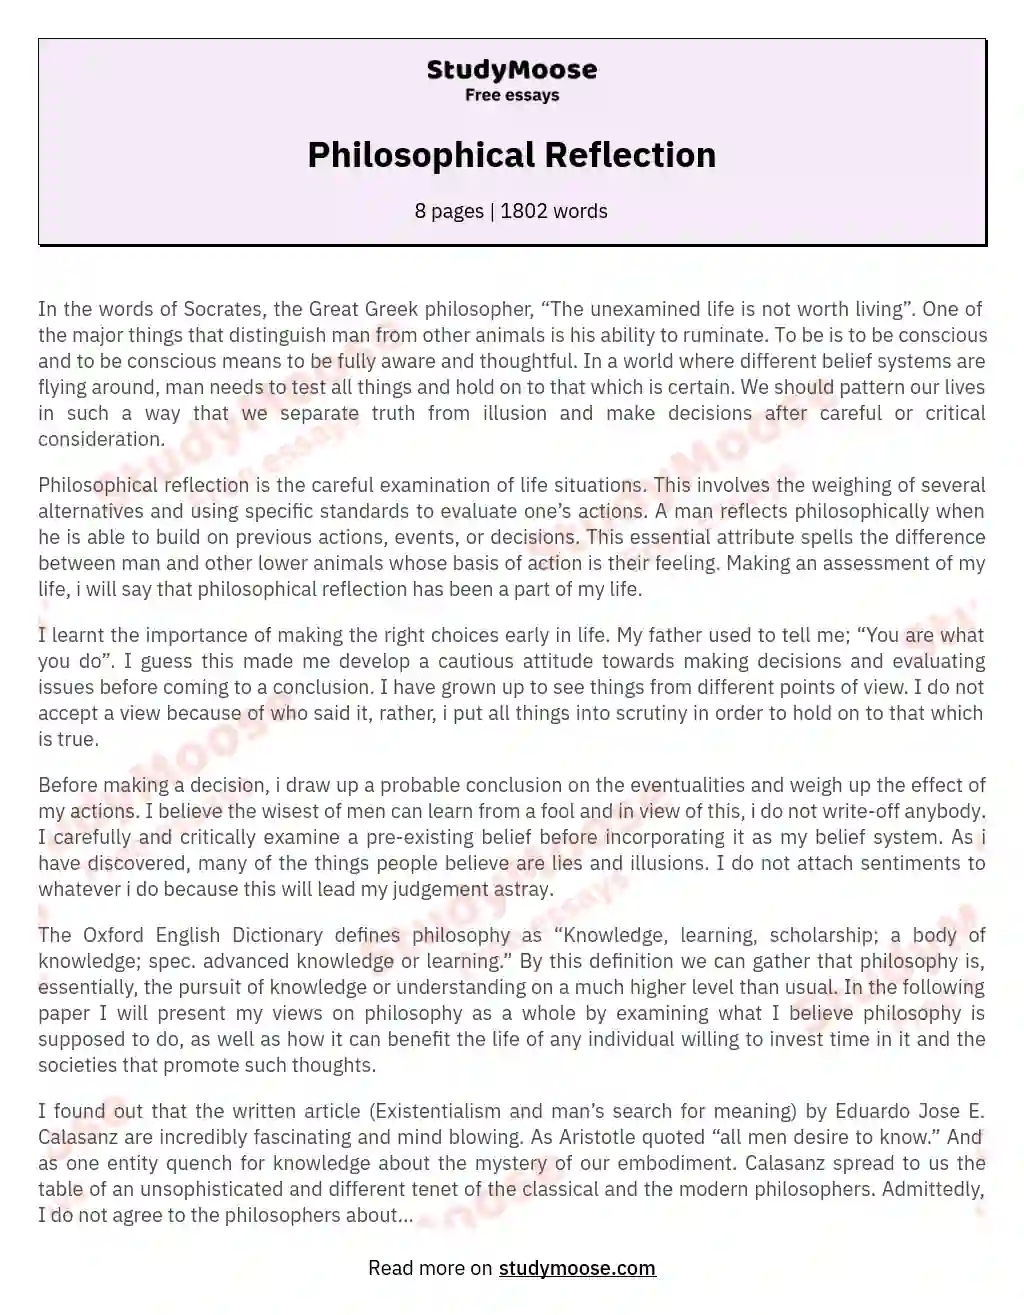 Philosophical Reflection essay